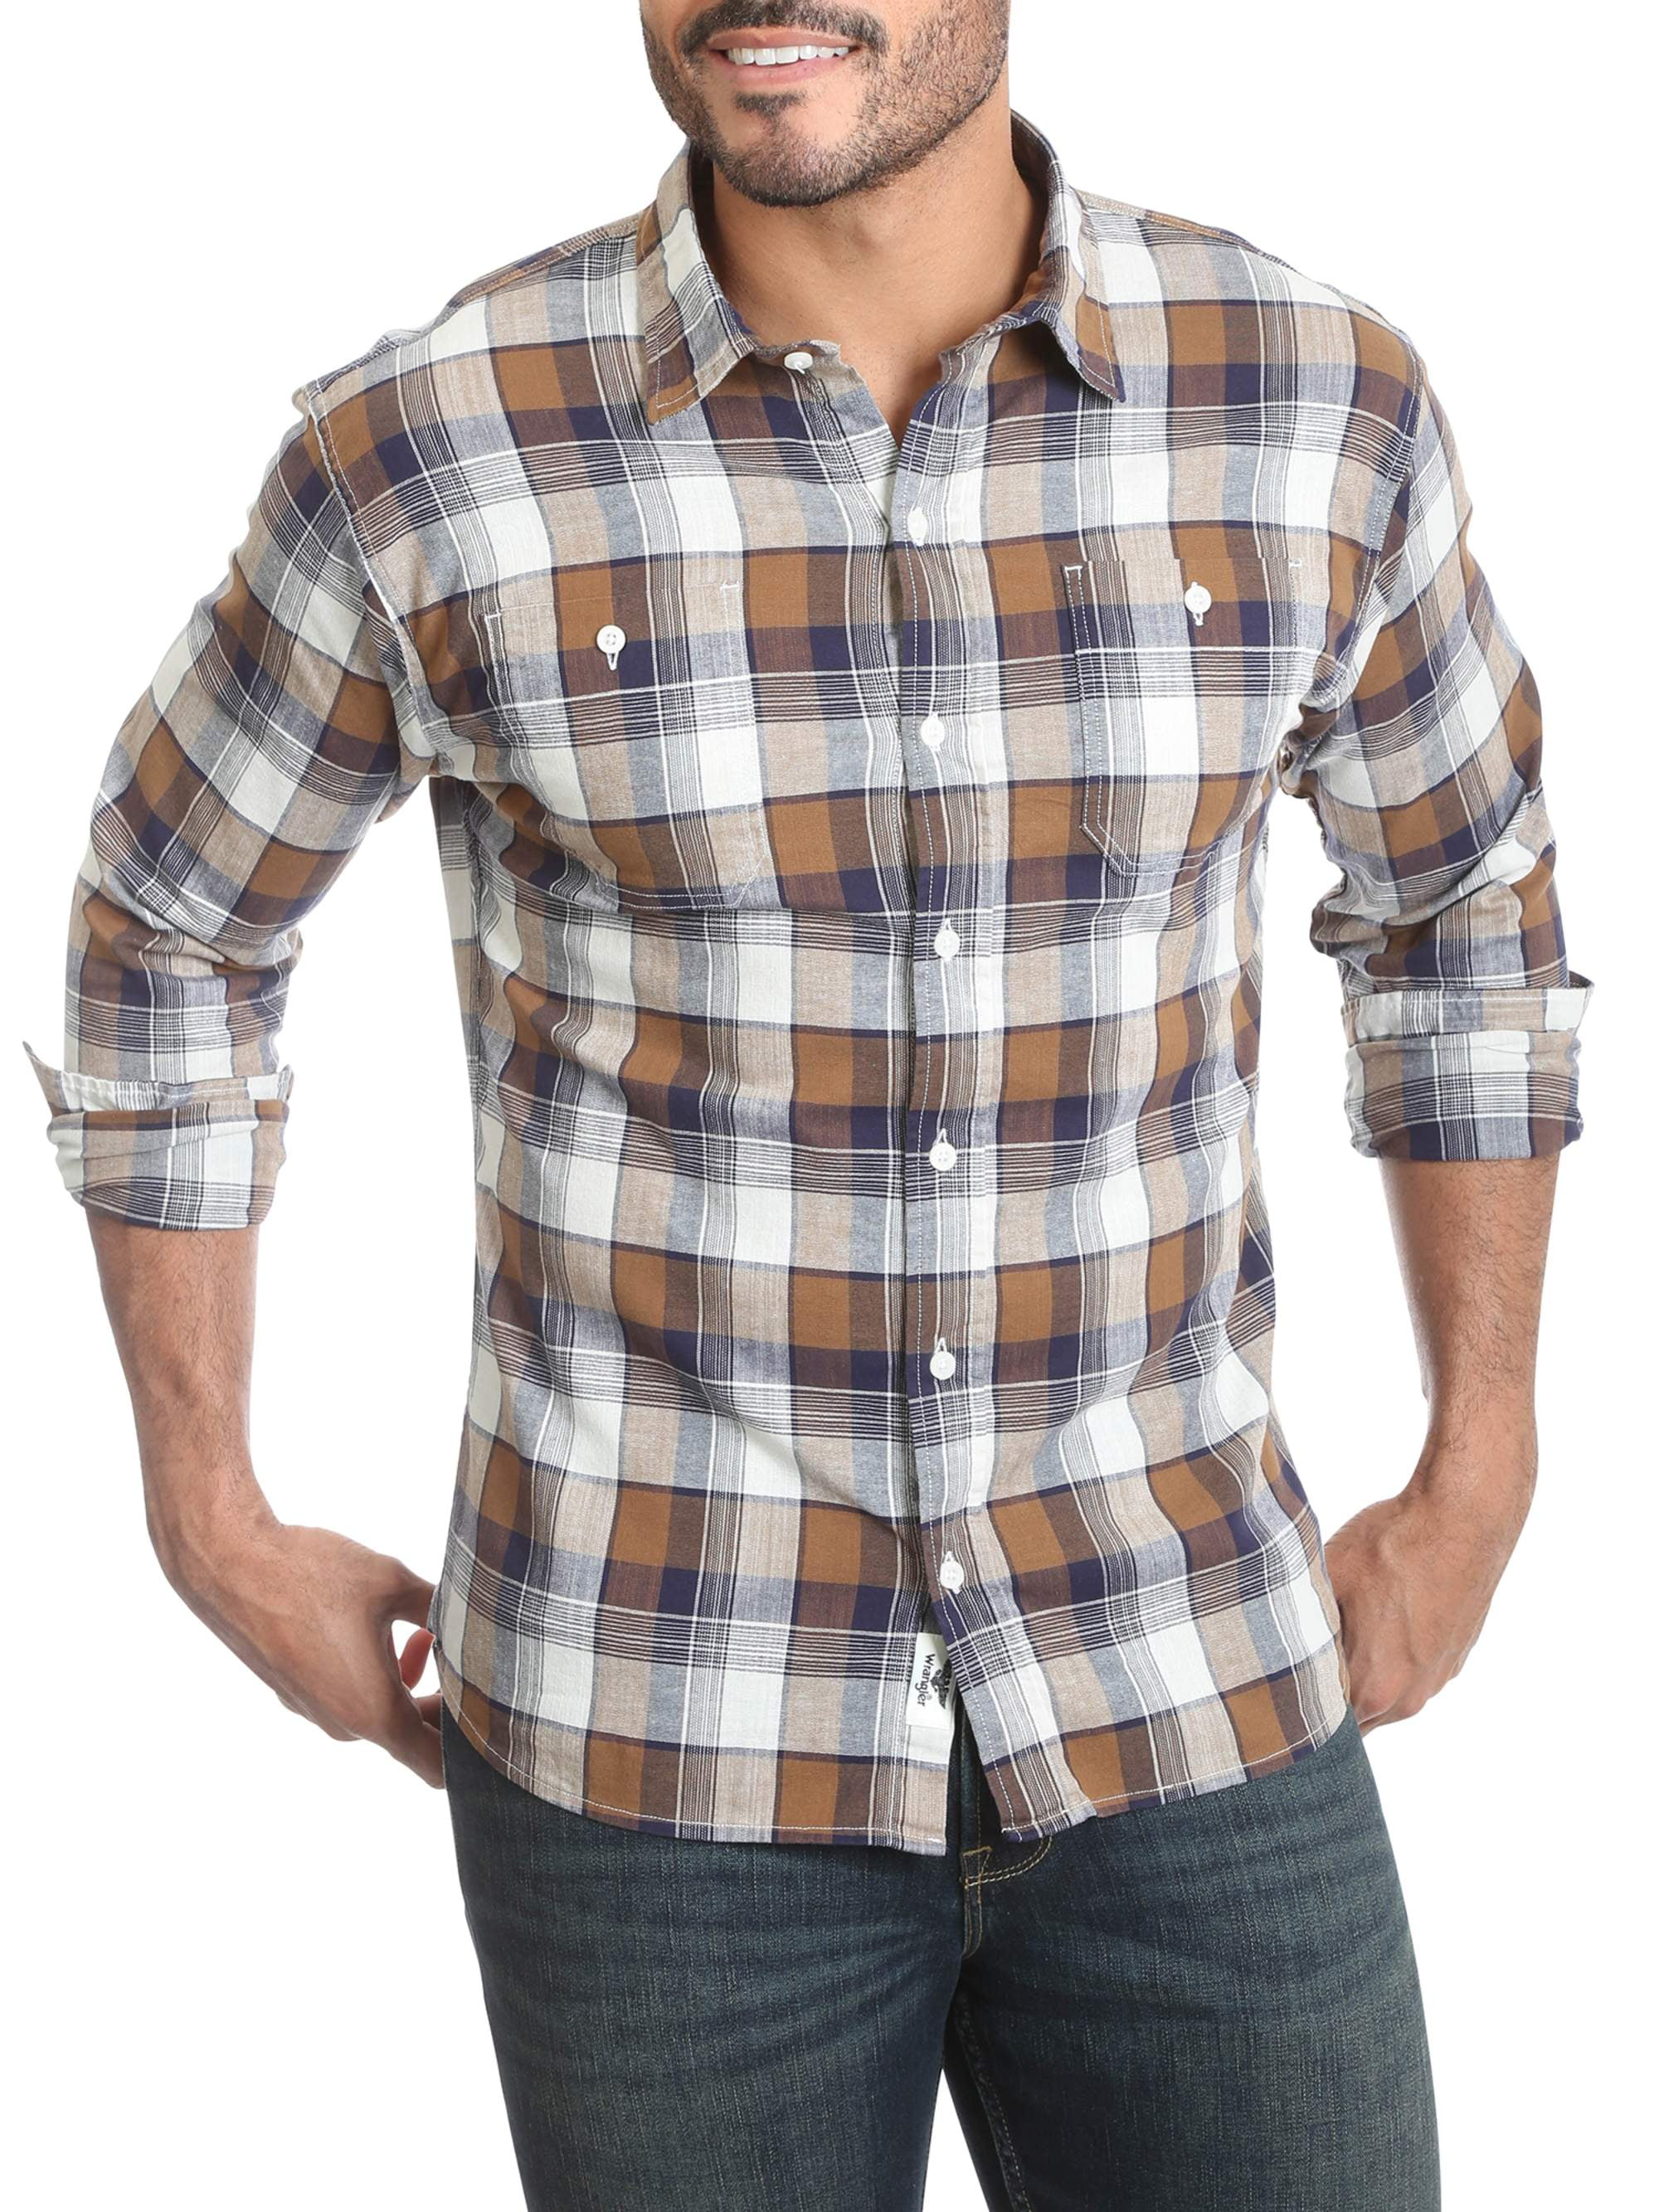 Wrangler Men's Premium Slim Fit Plaid Shirt 